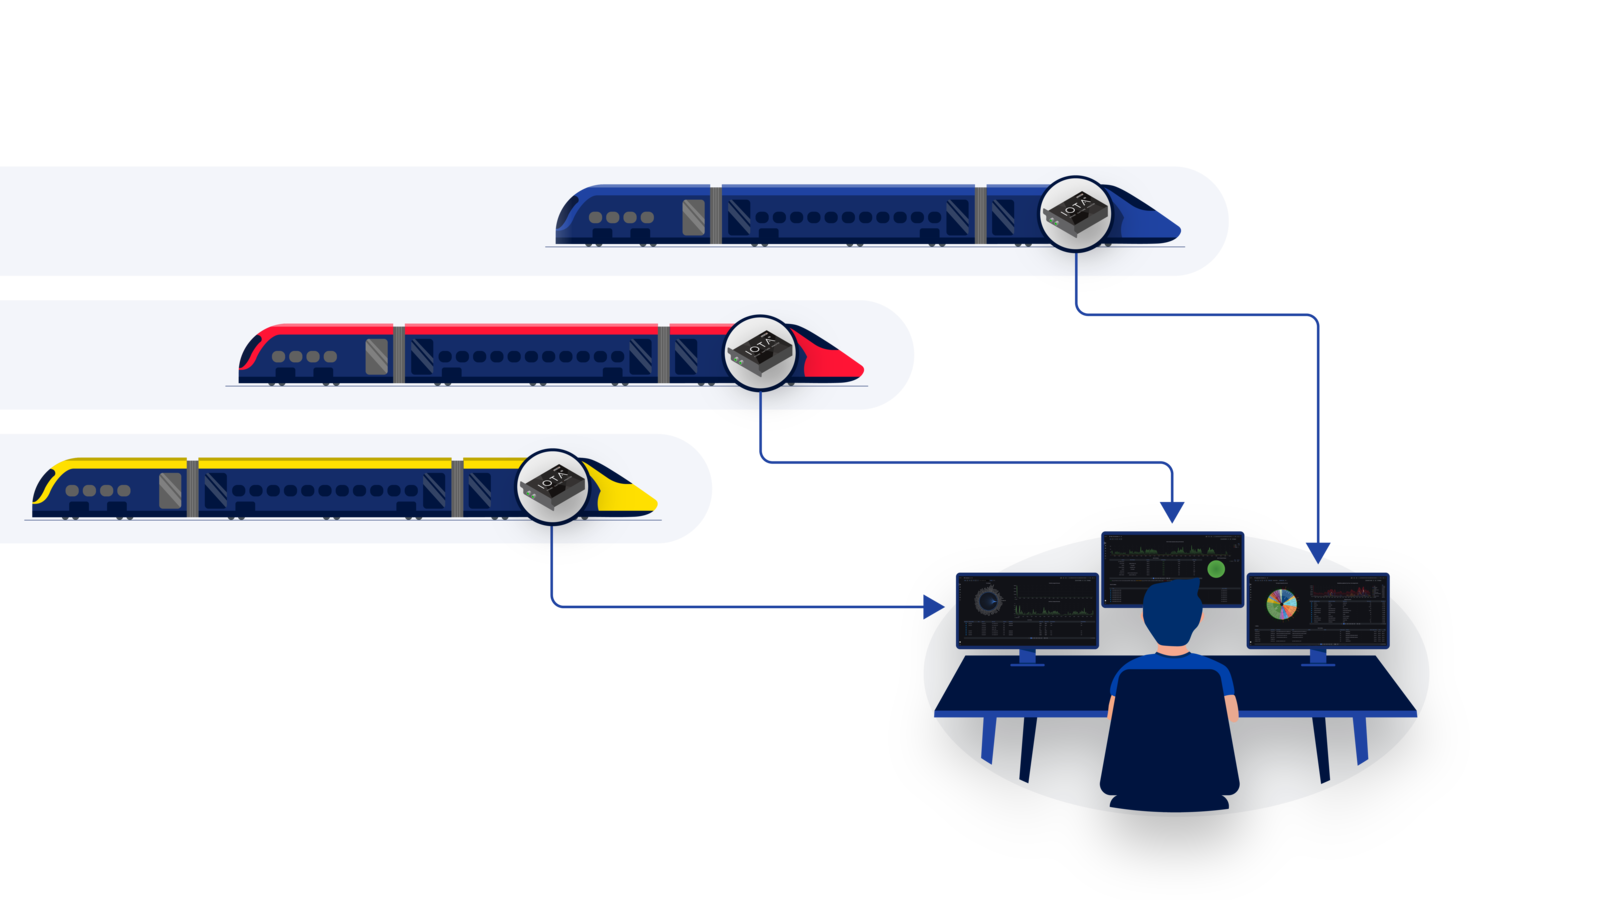 IOTA-M12-train-network-diagram-colored